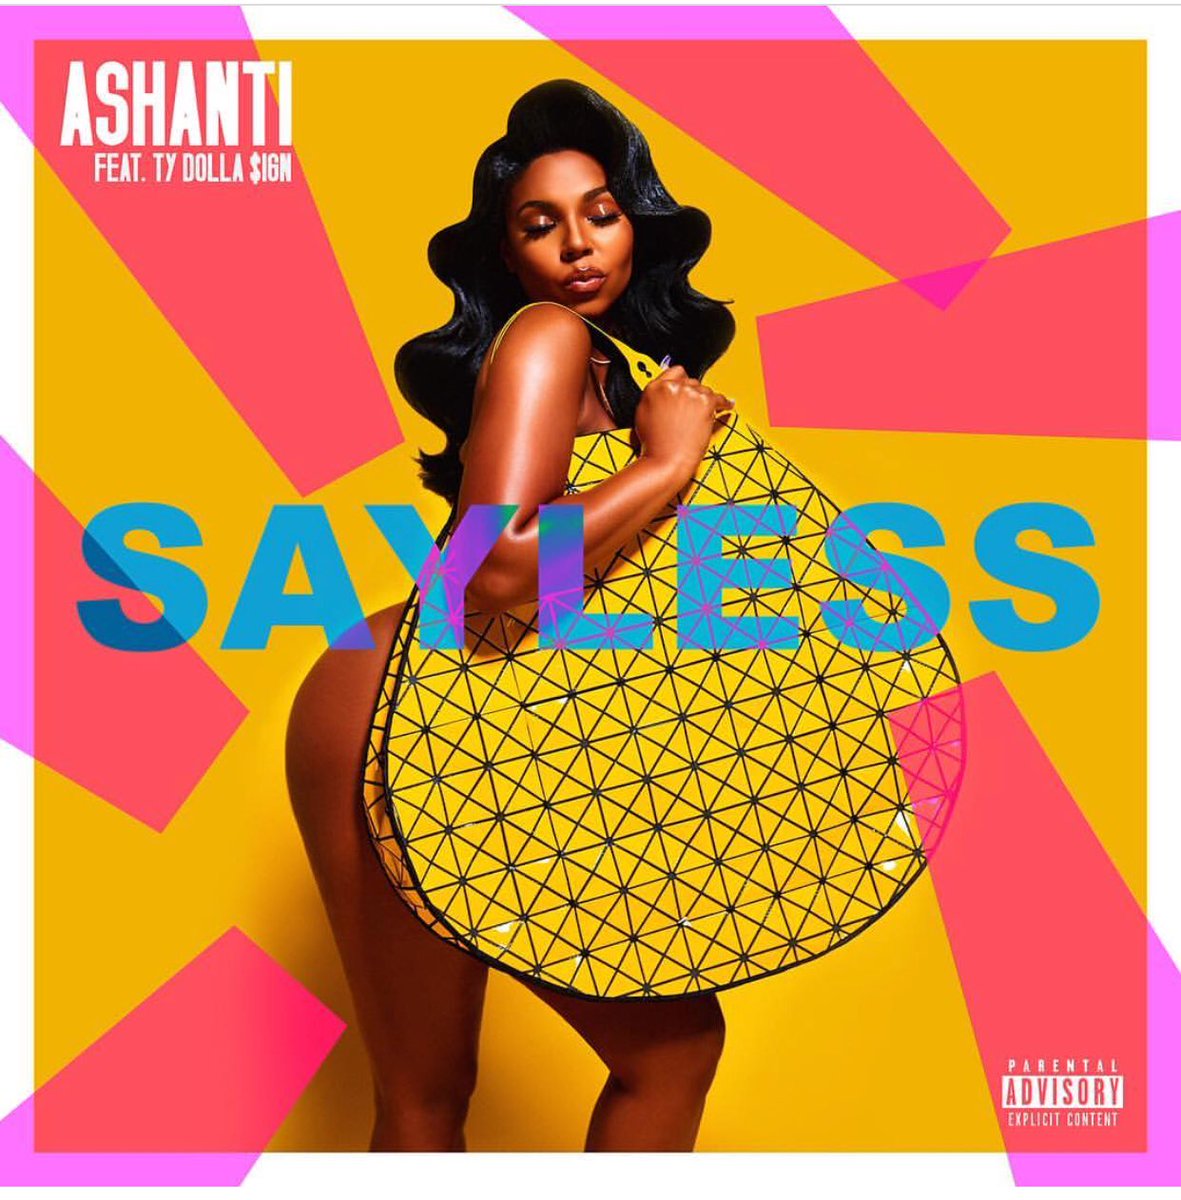 RT @iLissaNJ: Get my girl @ashanti’s new single #Sayless w/ @tydollasign out now ???????????? https://t.co/cmrf0wztcl https://t.co/lJUQMM3Ncs